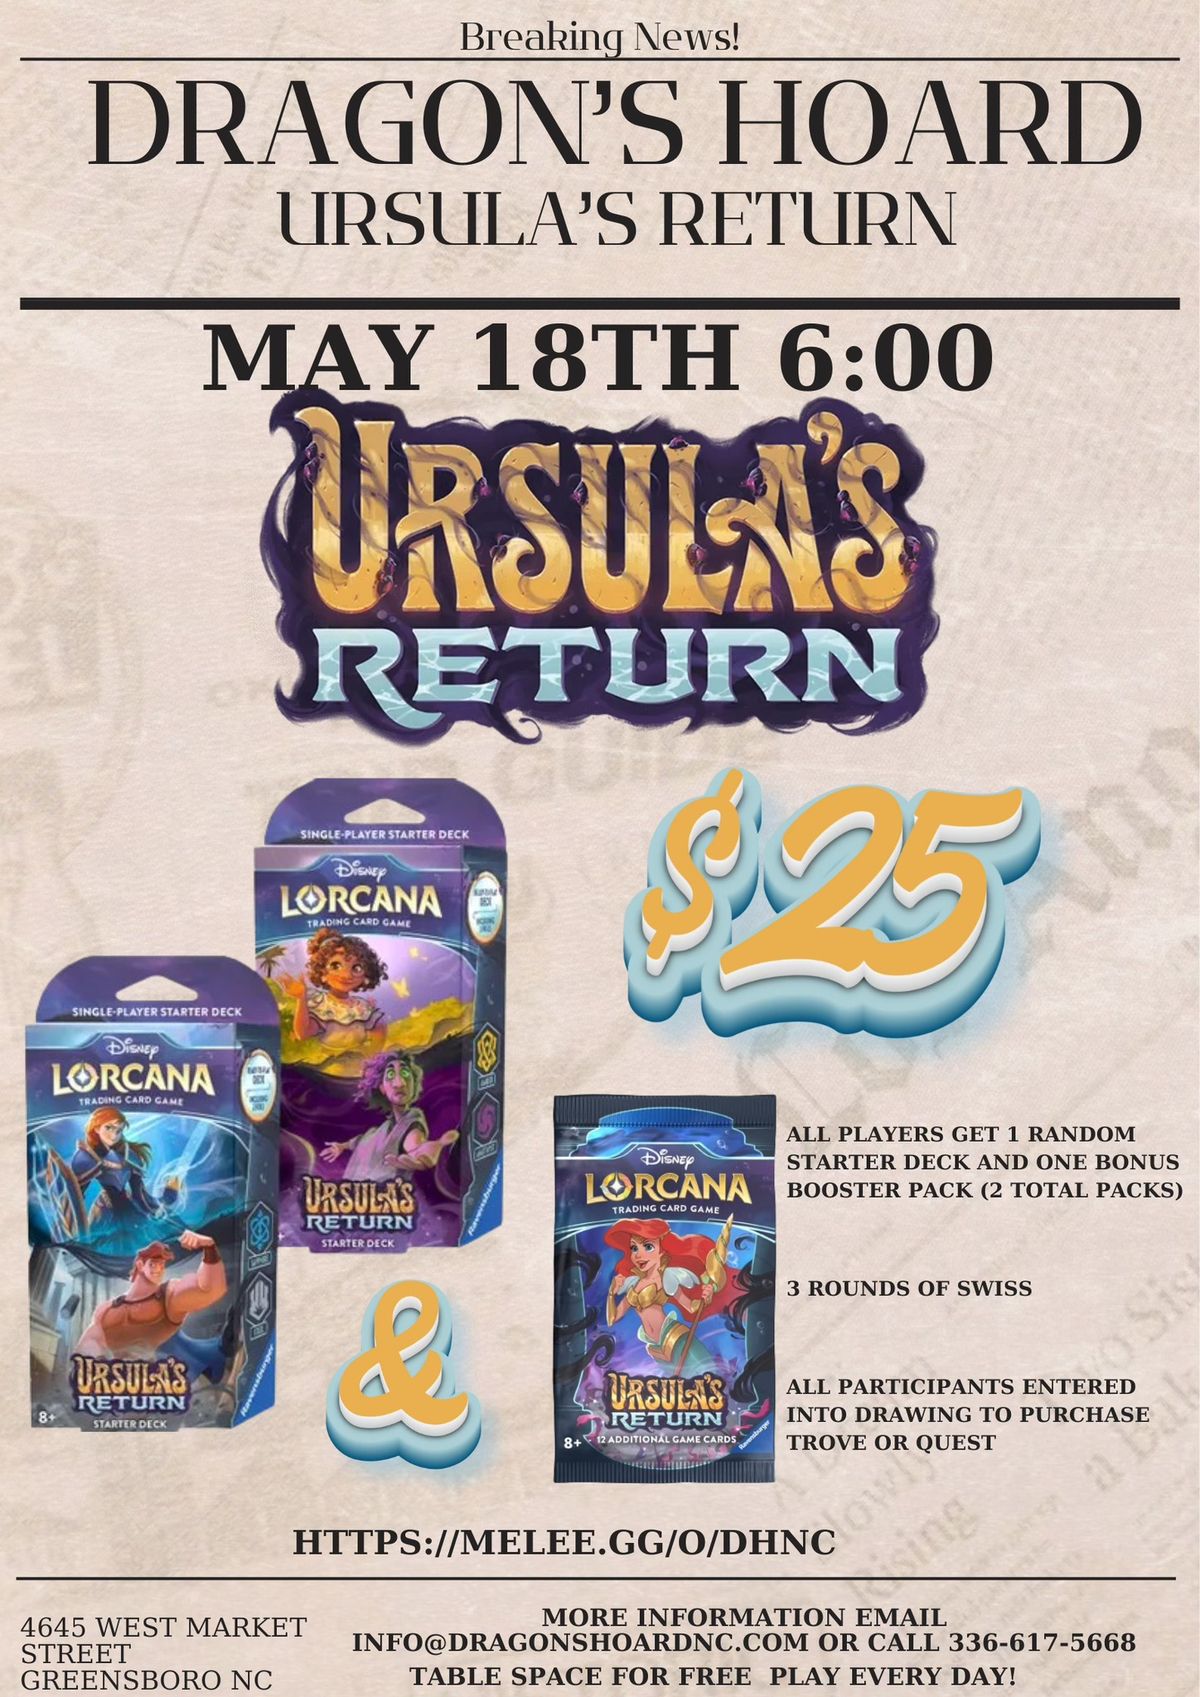 Ursula's Return Starter Deck Tournament May 18th 6:00